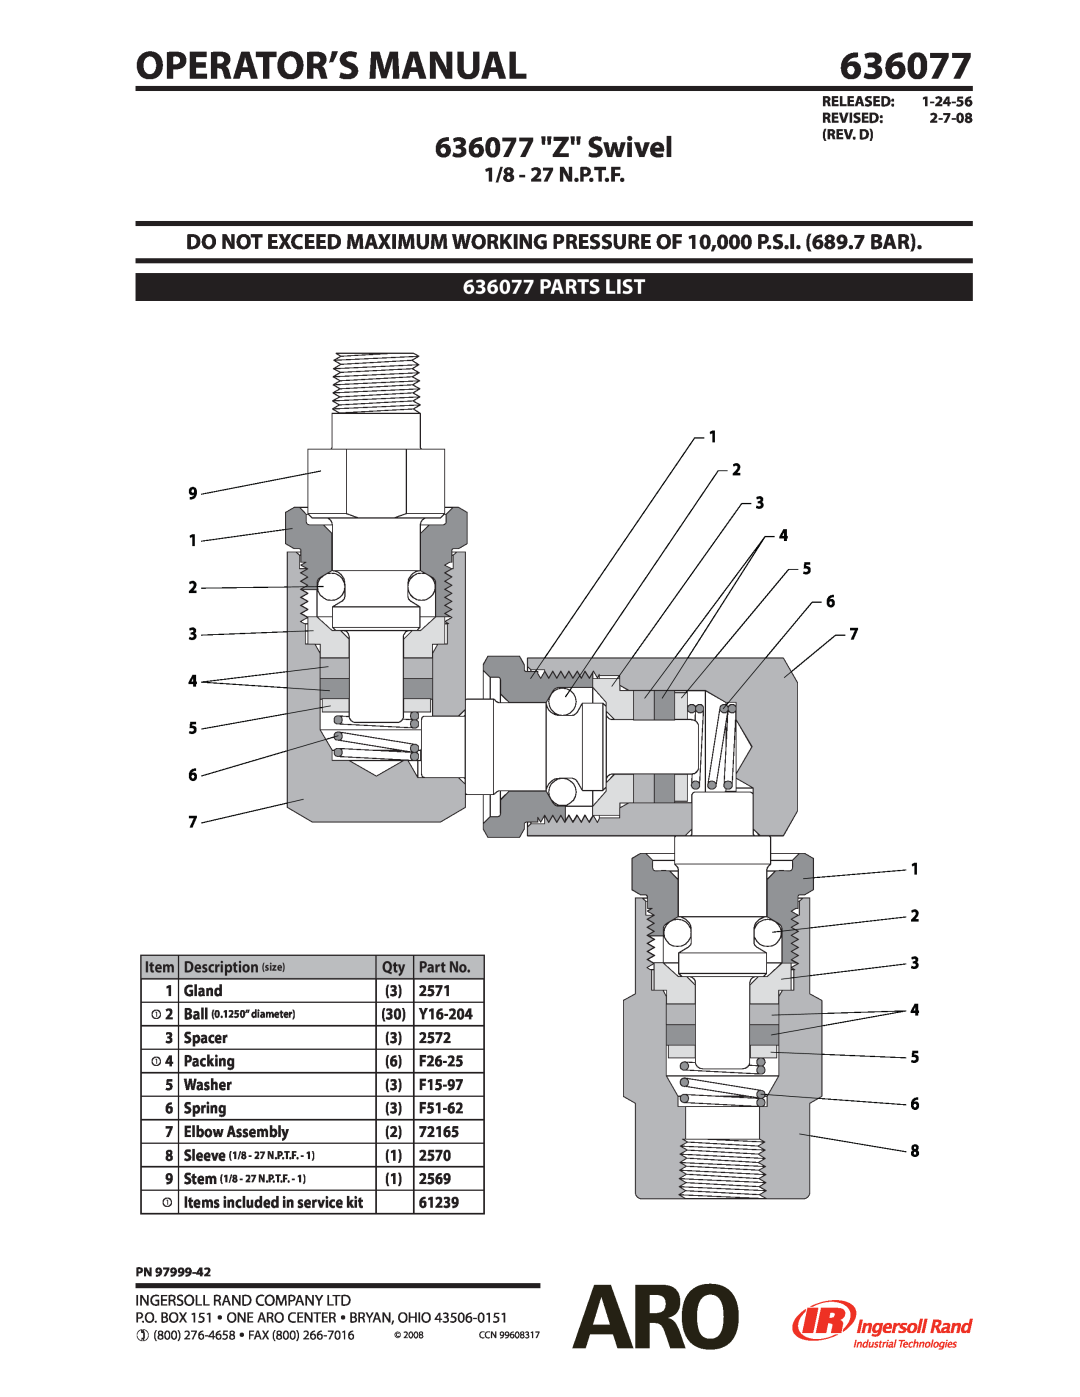 Ingersoll-Rand 636077 manual Operator’S Manual, Z Swivel, 1/8 - 27 N.P.T.F, Parts List 